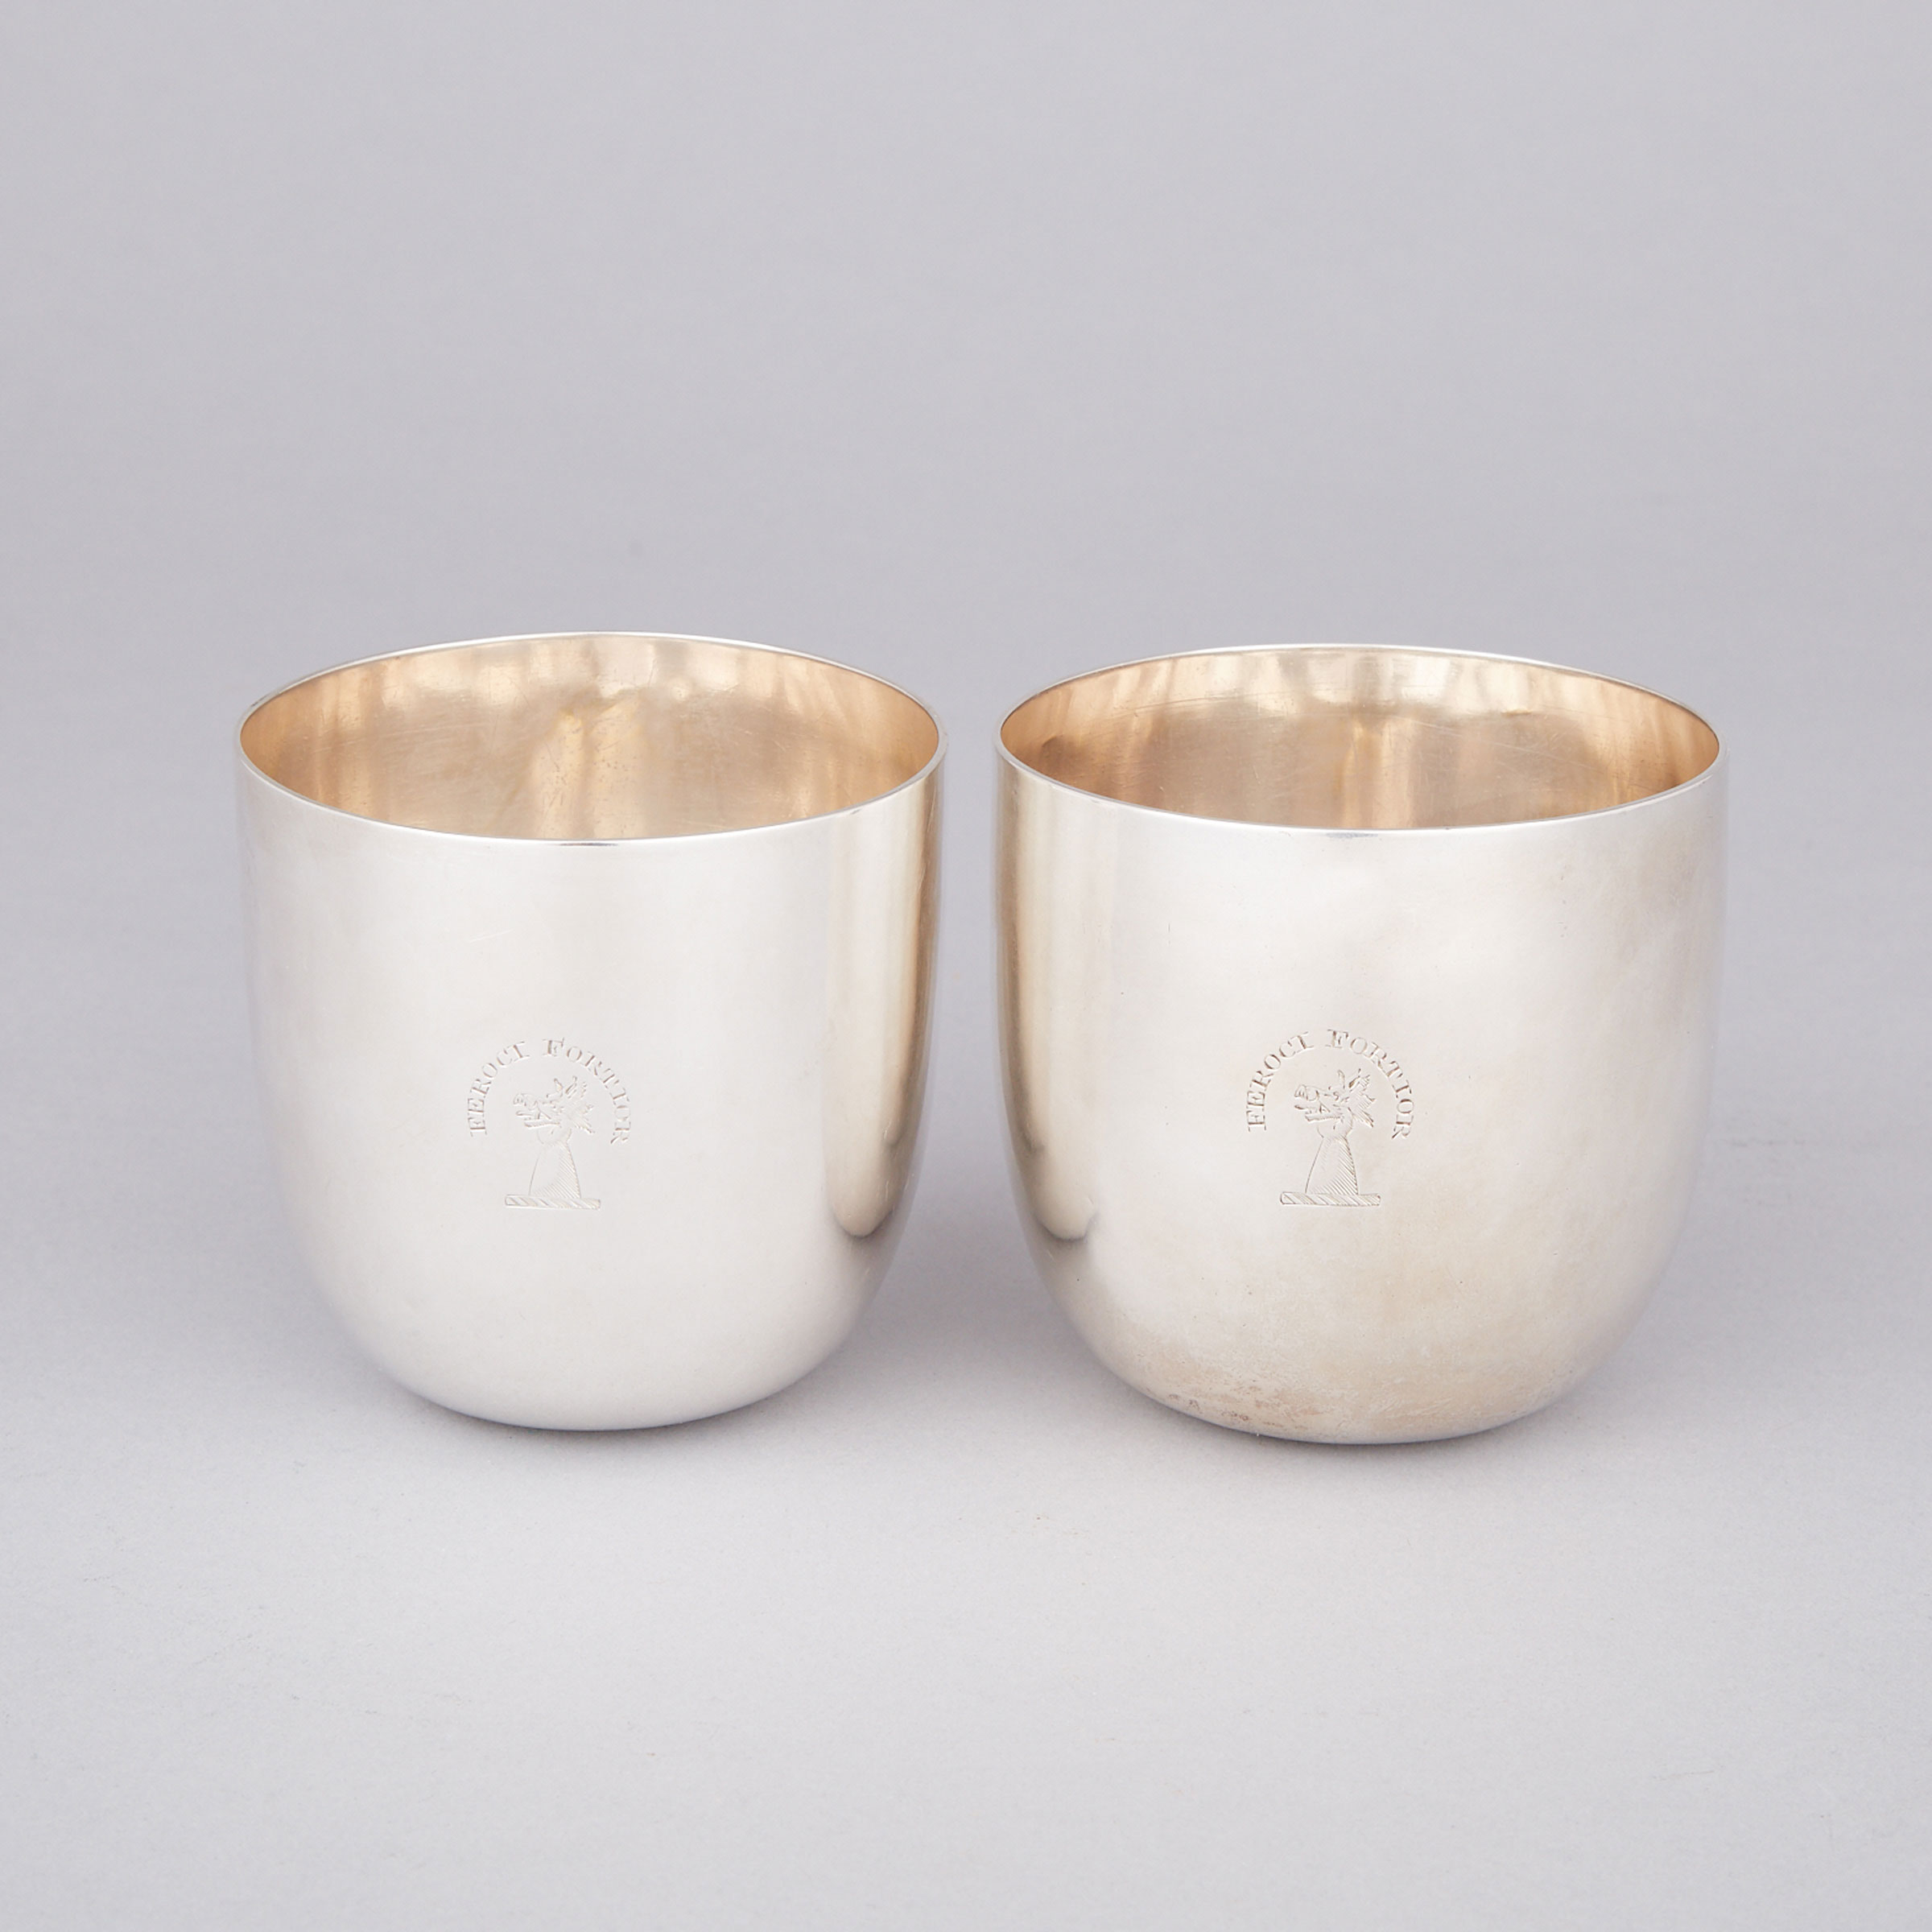 Pair of George III Silver Nesting Tumbler Cups, Joseph Angell I, London, 1813